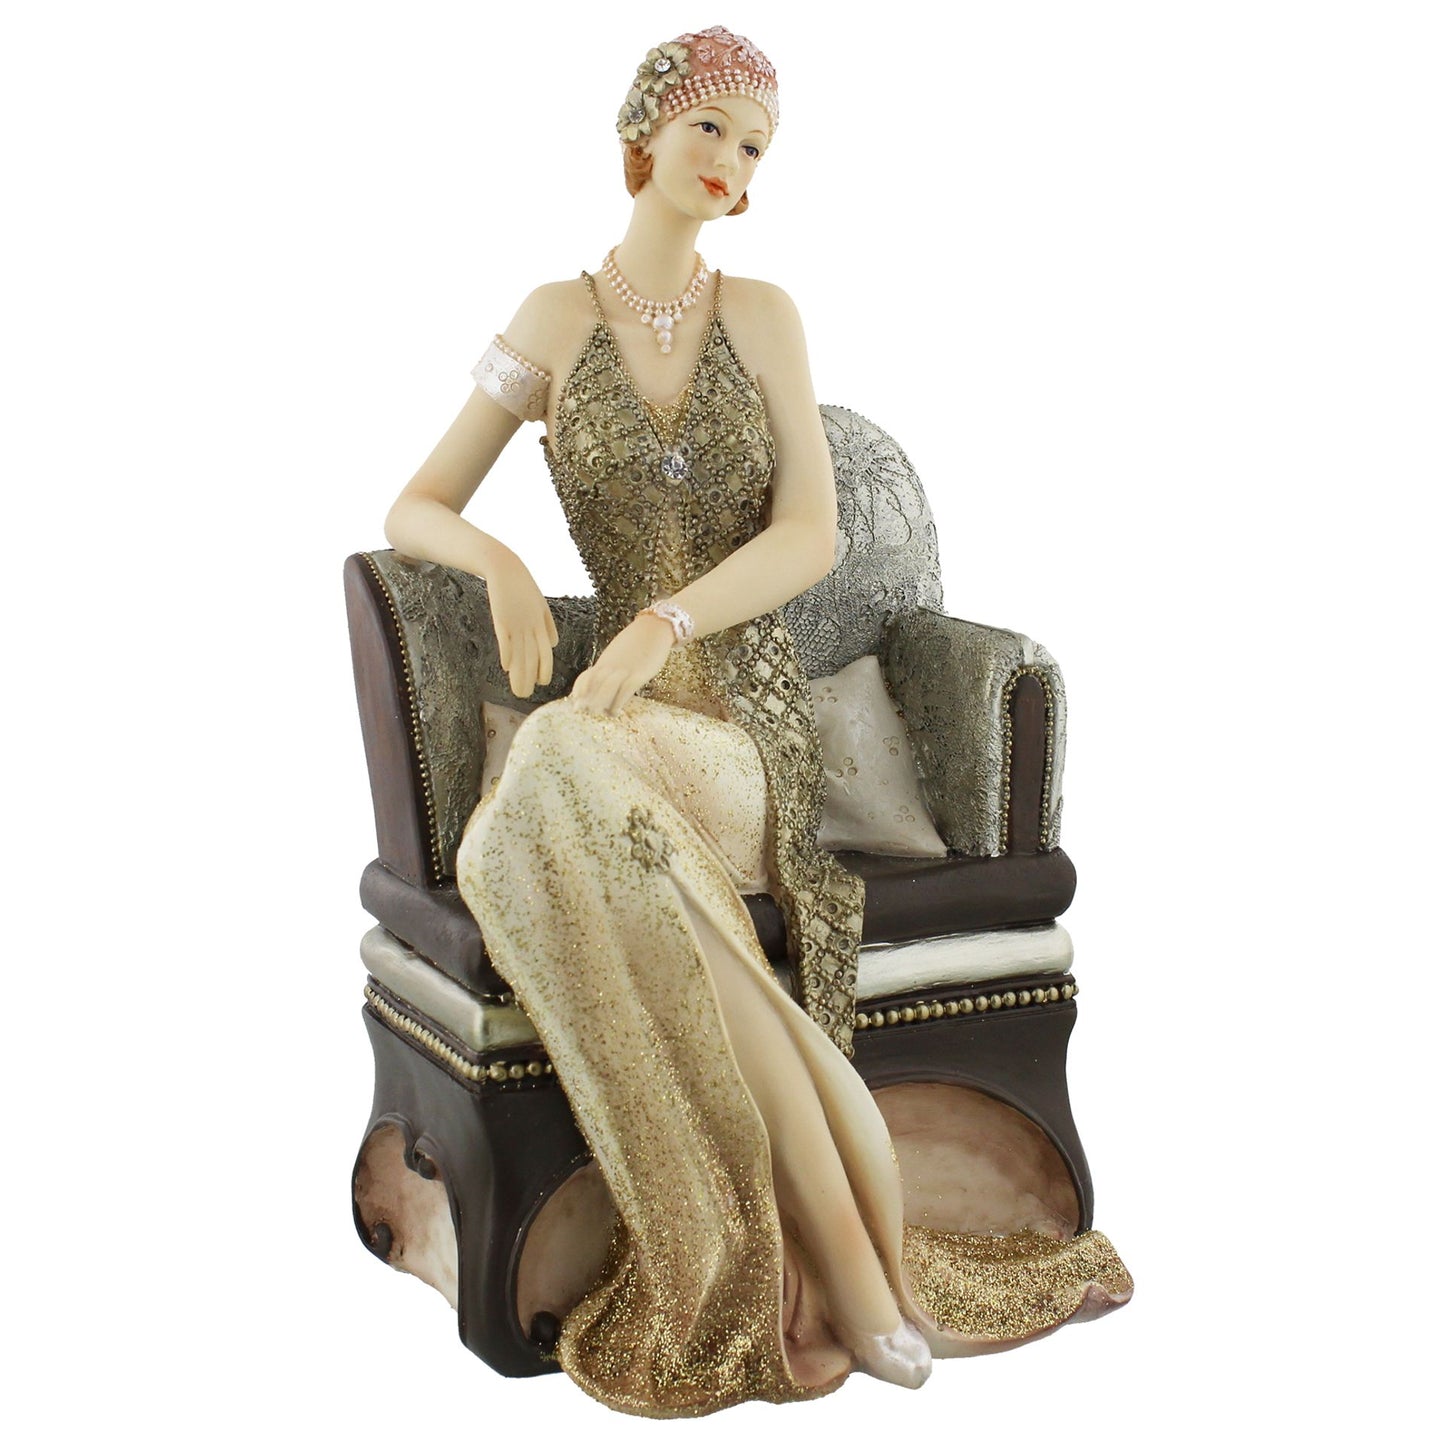 Broadway Belles "Valerie" Lady Figurine, Gold Glitter Dress